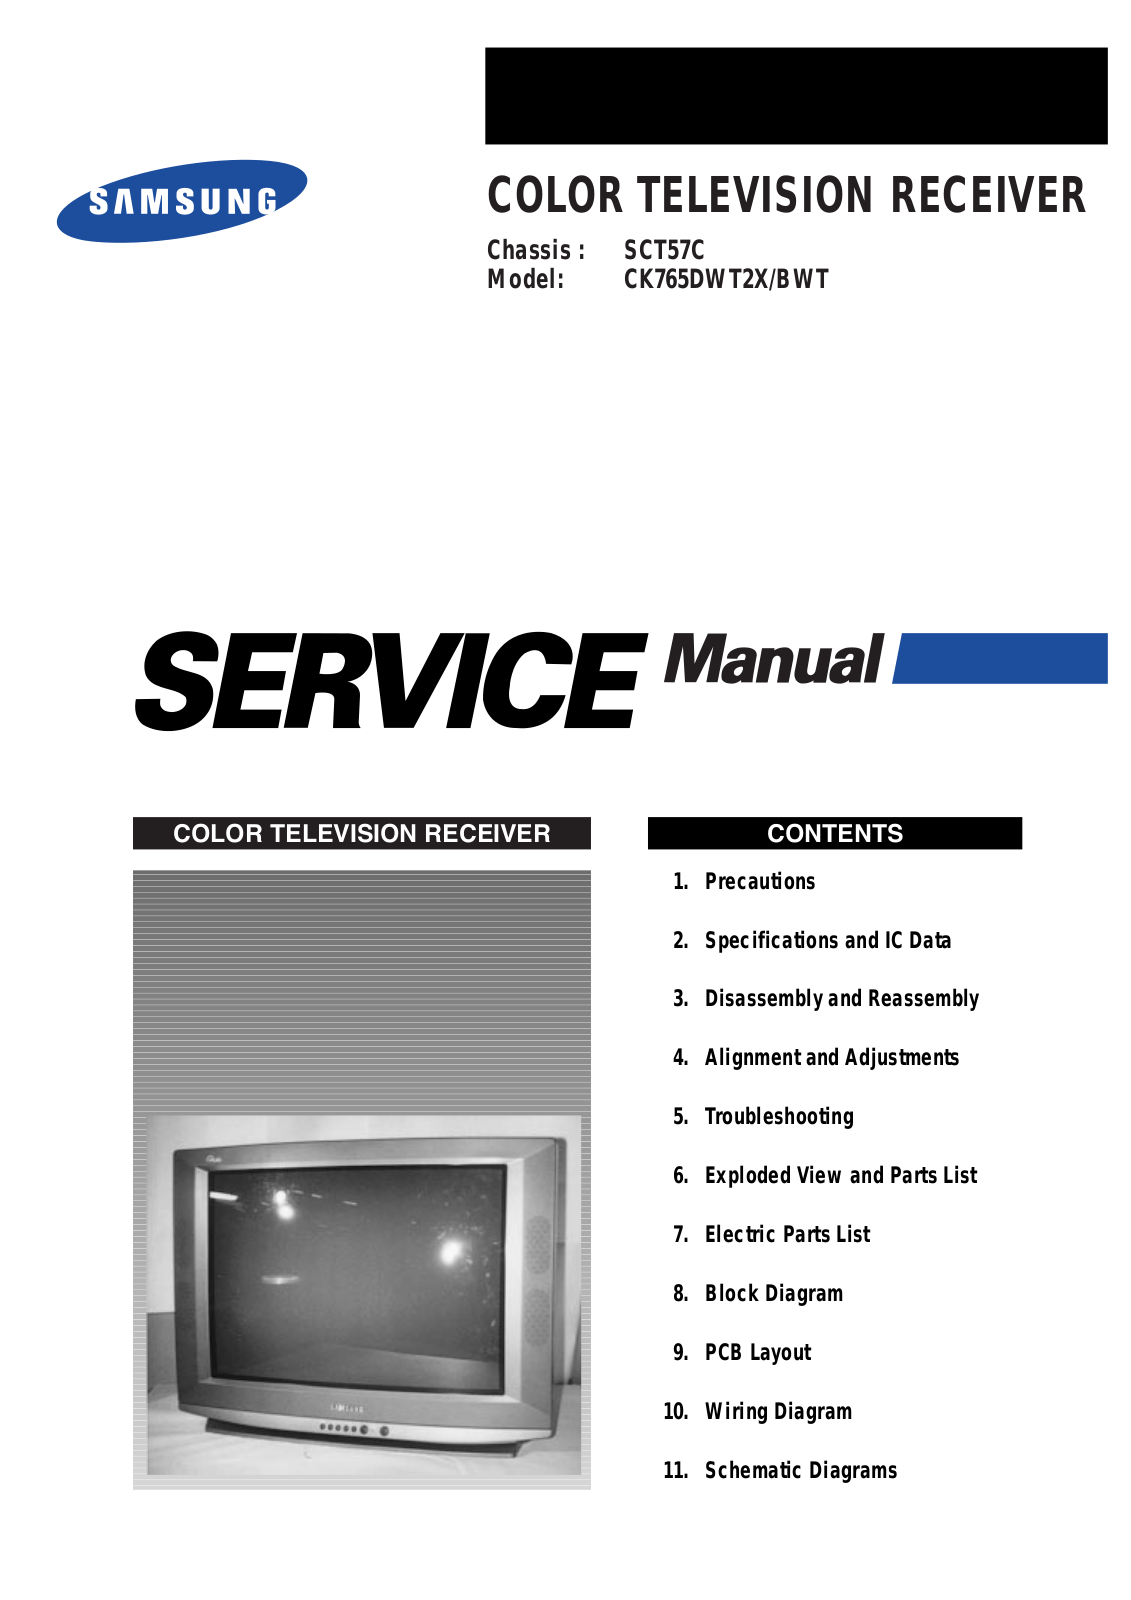 Samsung ck765 service manual